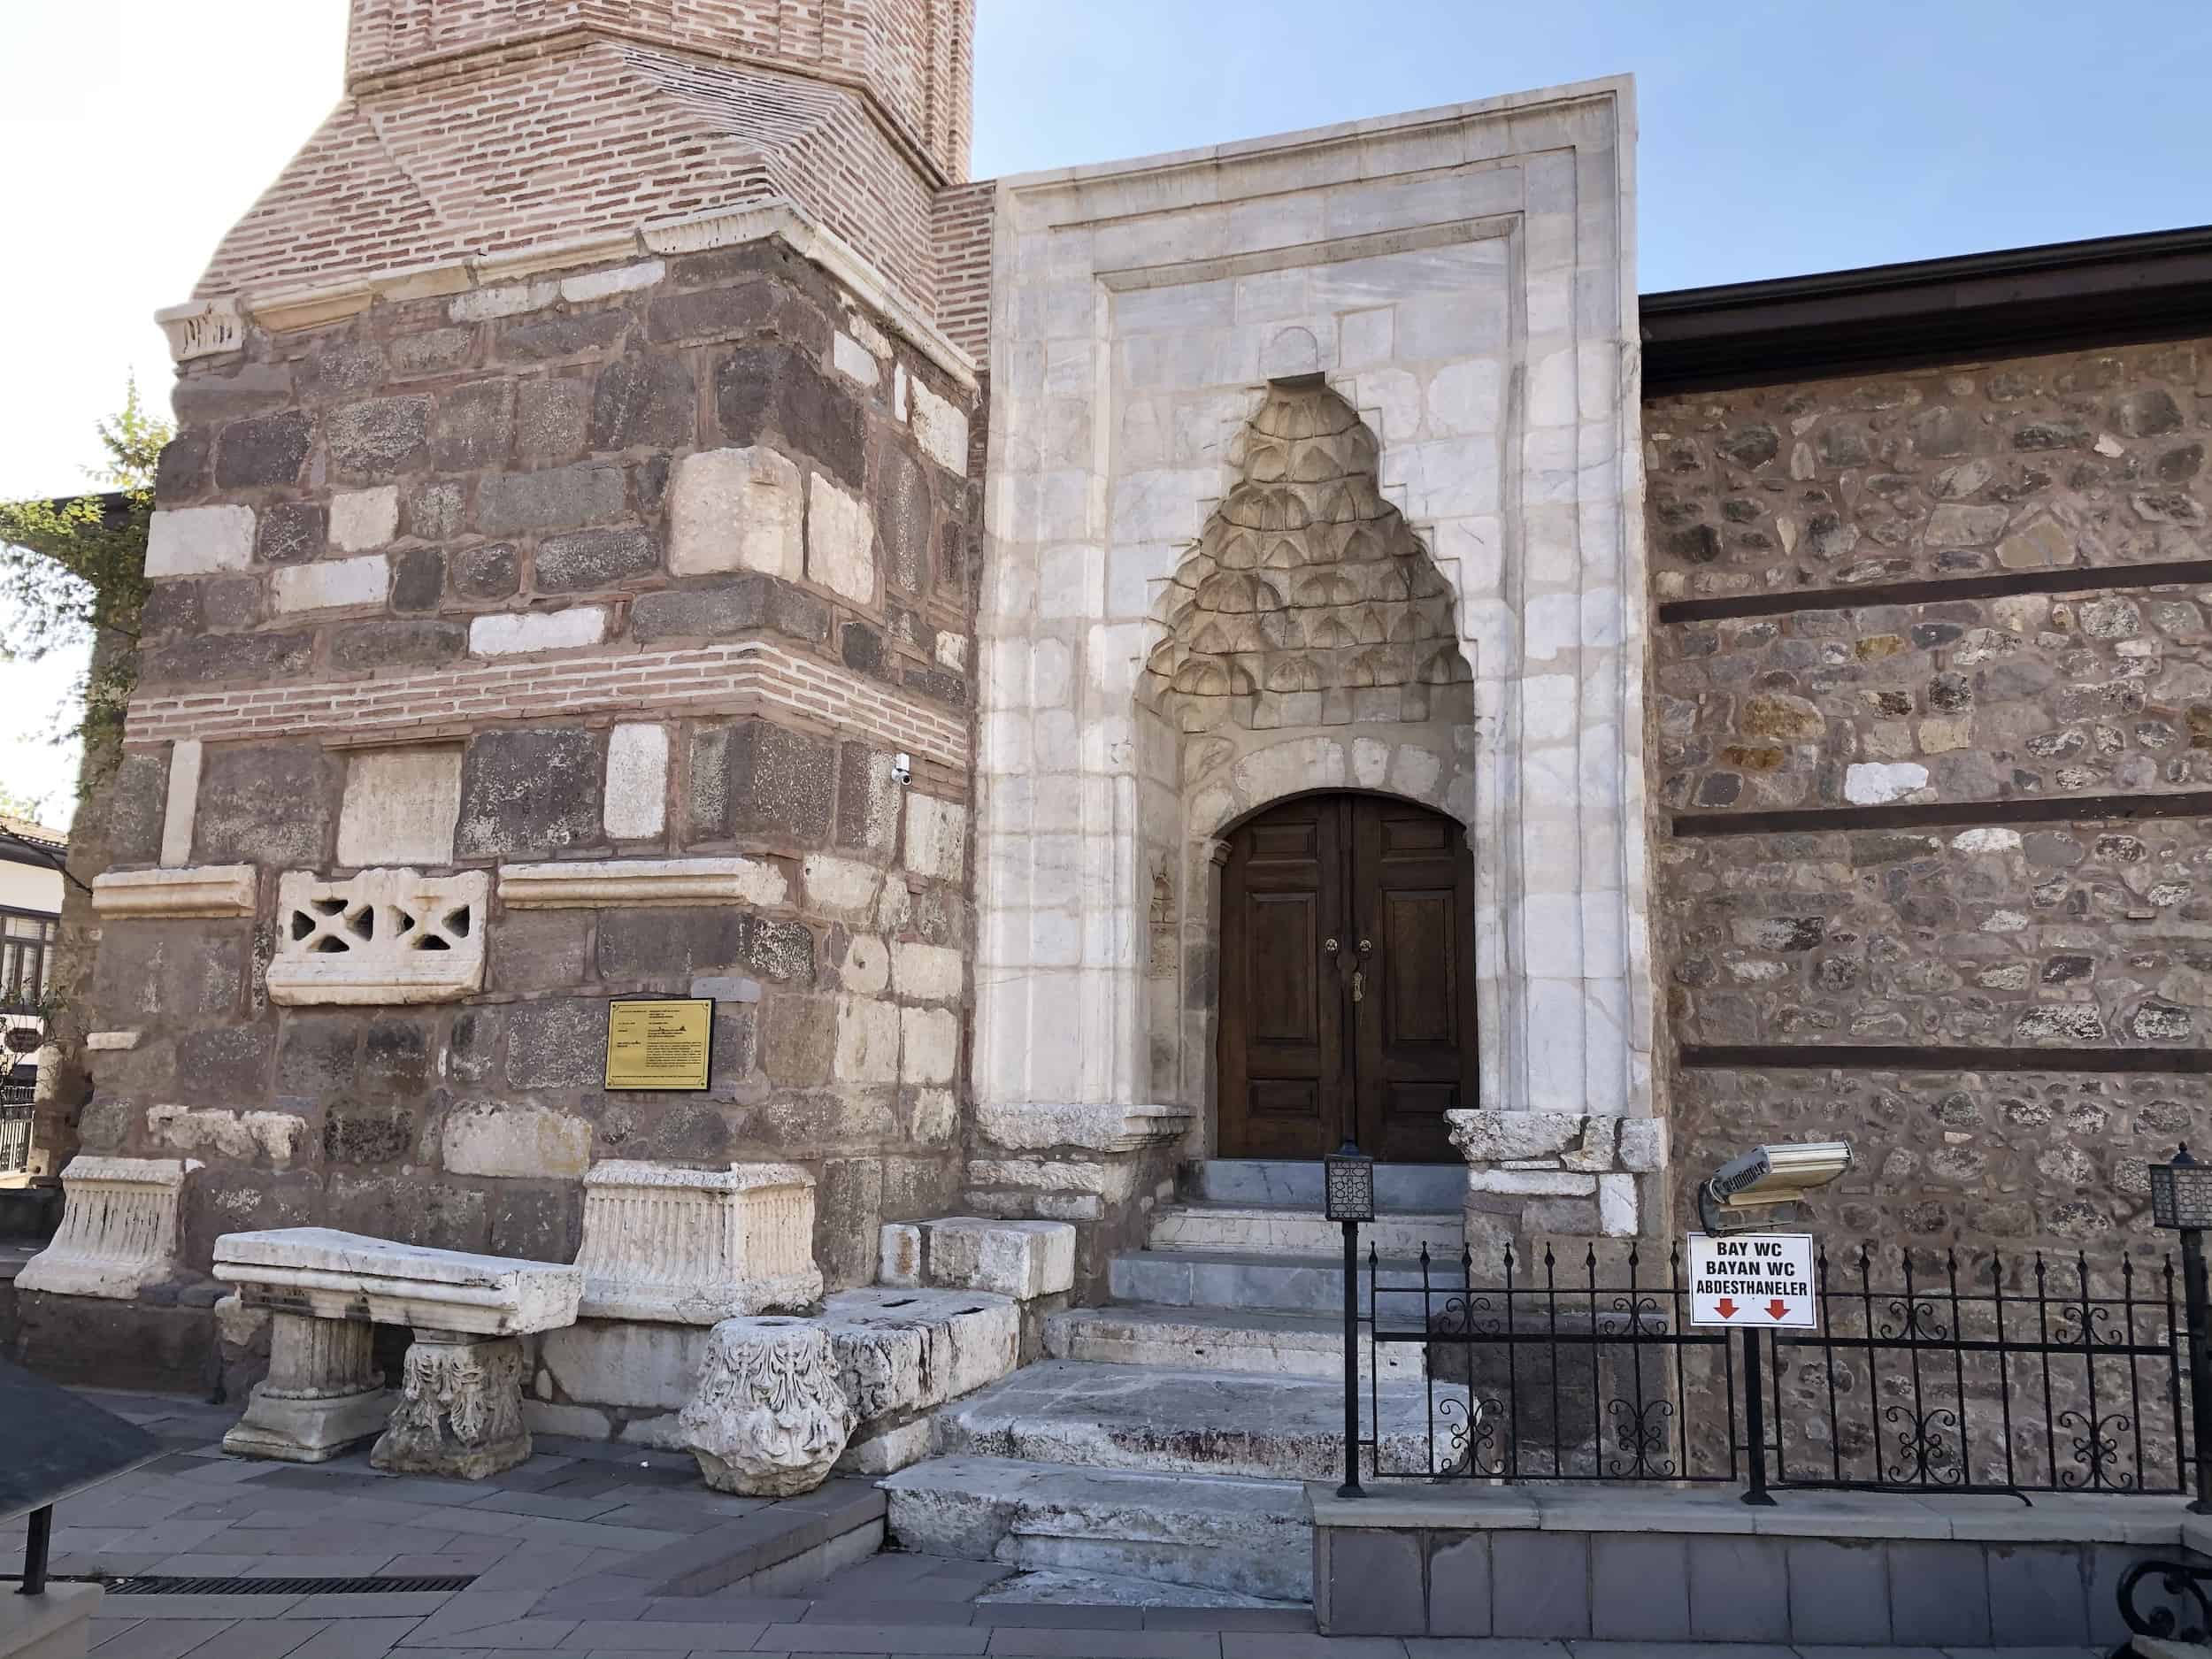 Entrance portal of the Aslanhane Mosque in Samanpazarı, Ankara, Turkey